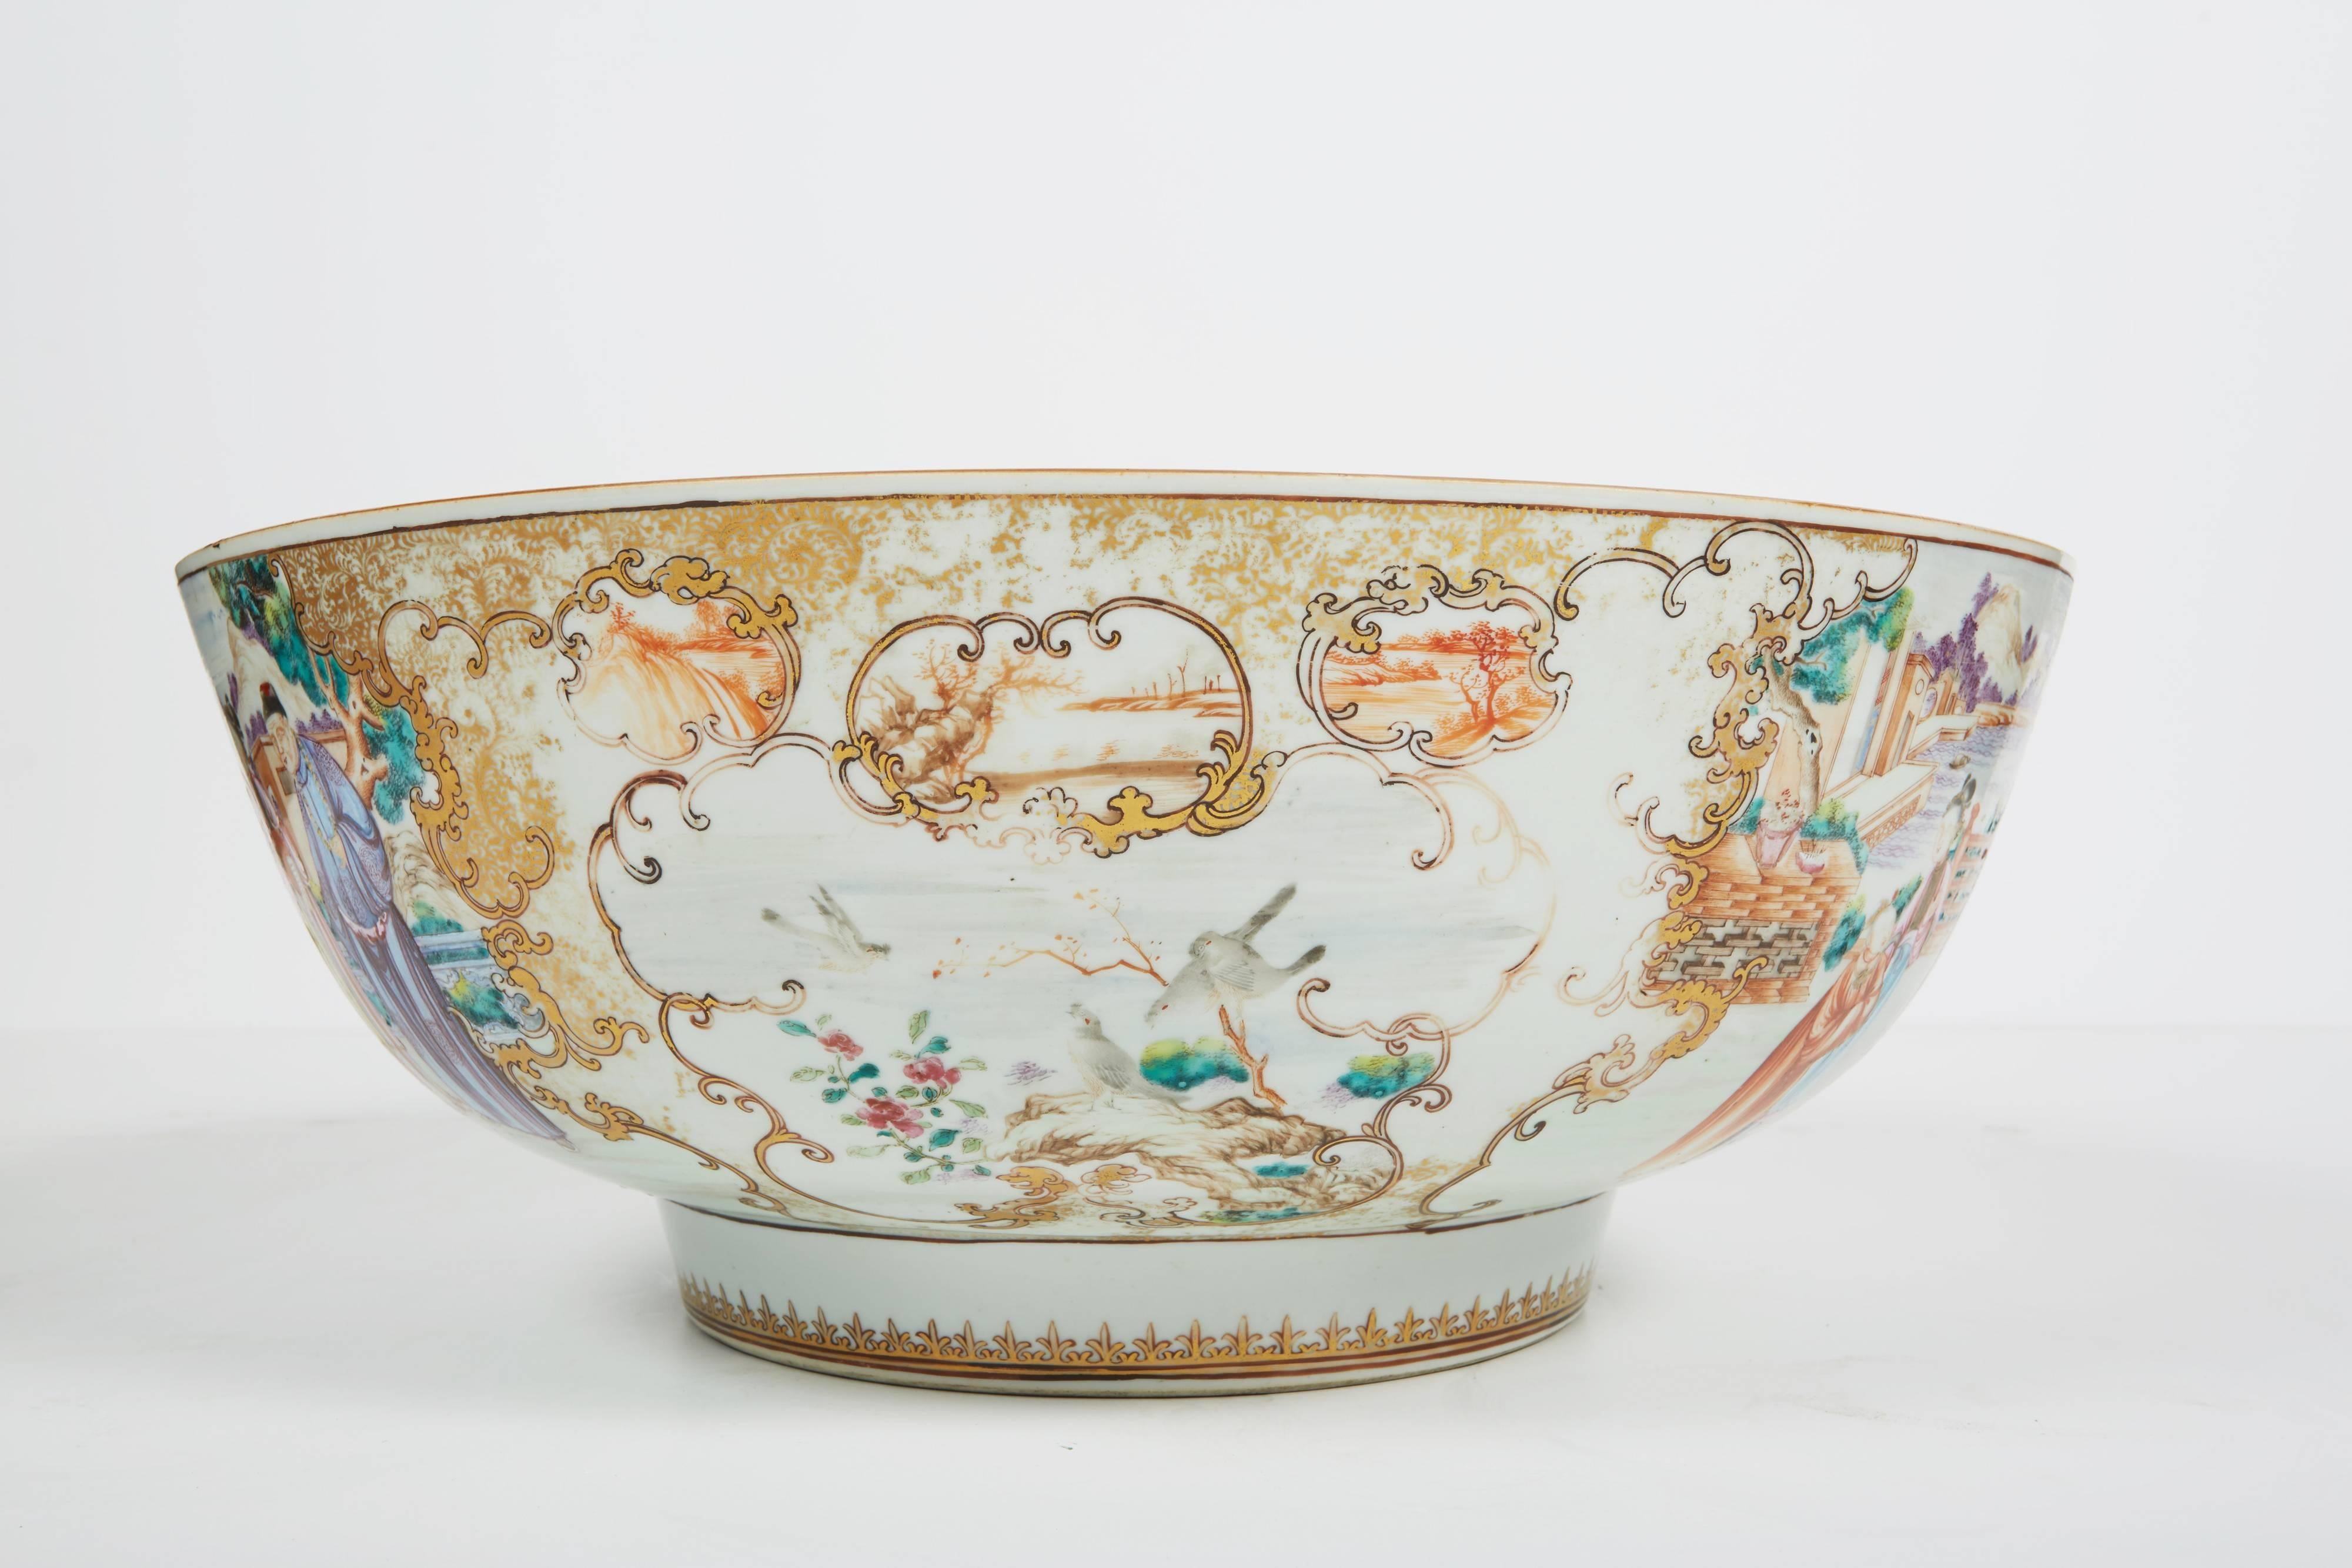 18th century punch bowl